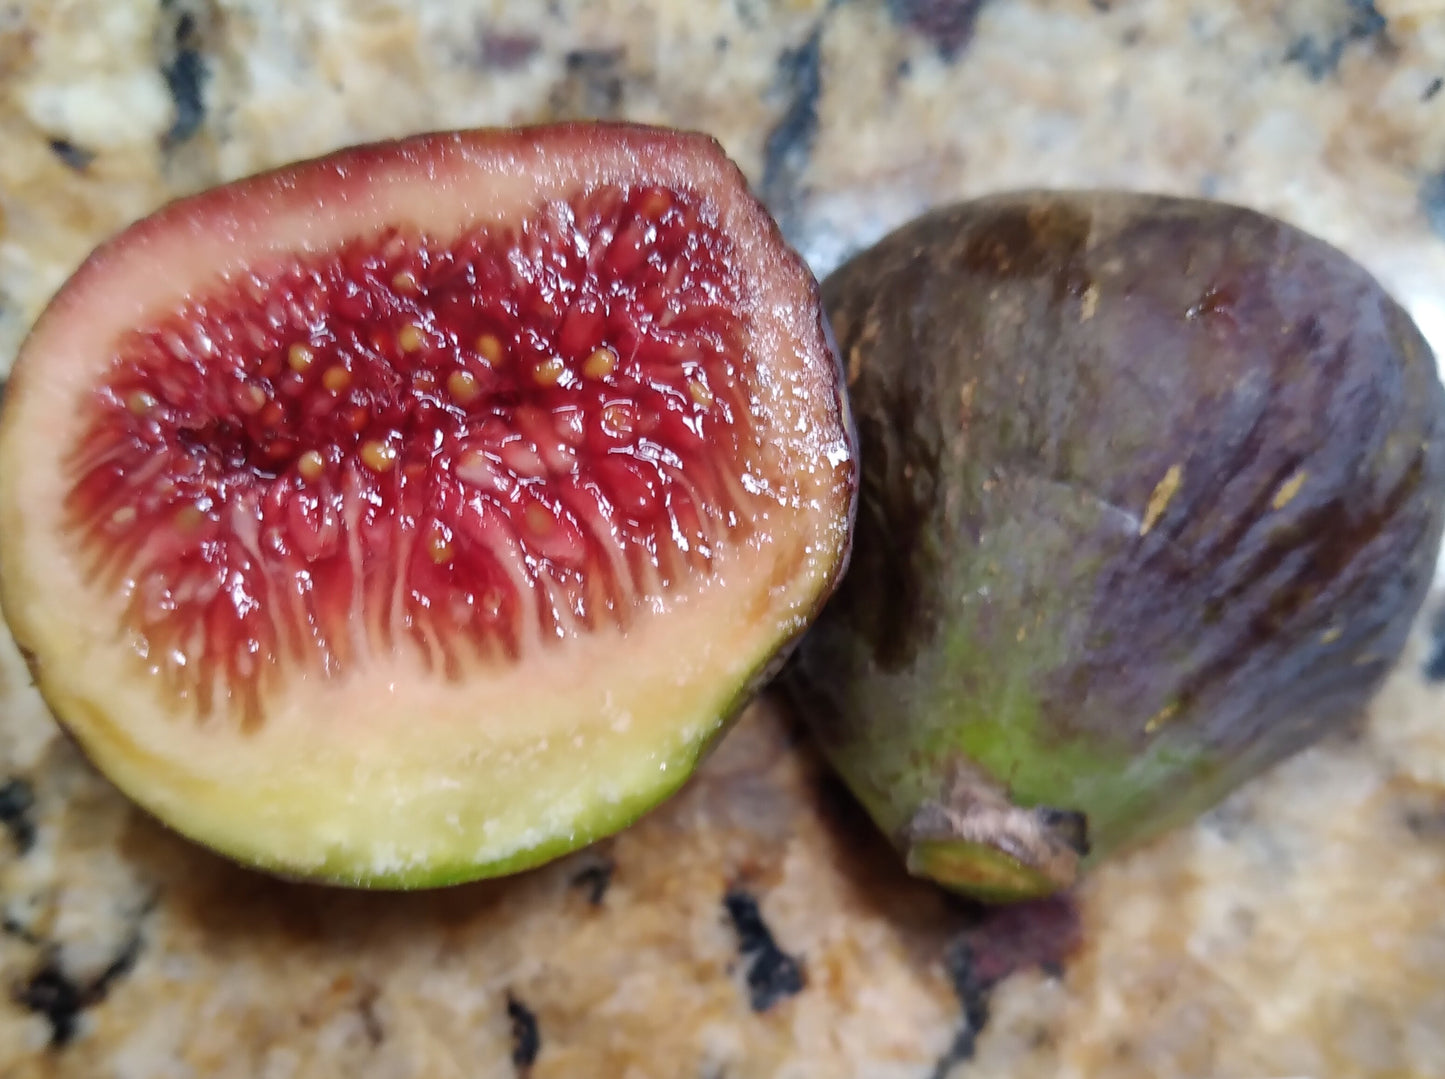 Black Zadar Fig - 2 Cuttings - Croatian Variety - Delicious Squat Figs